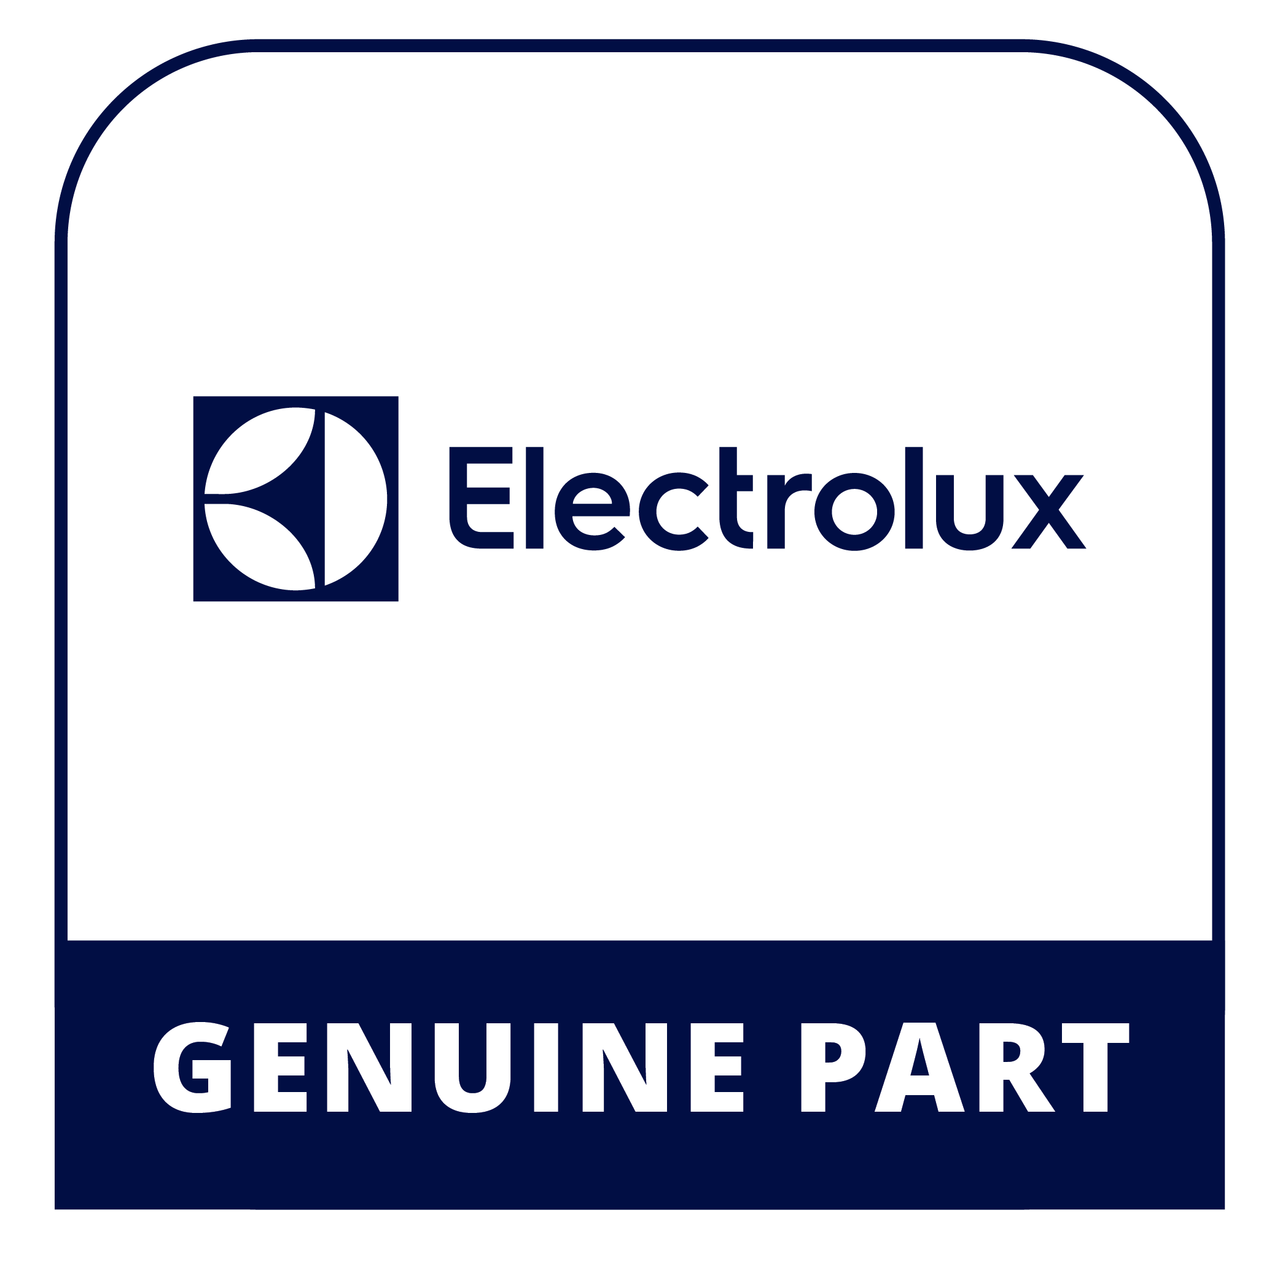 Frigidaire - Electrolux 405543872 Shipping Kit - Genuine Electrolux Part